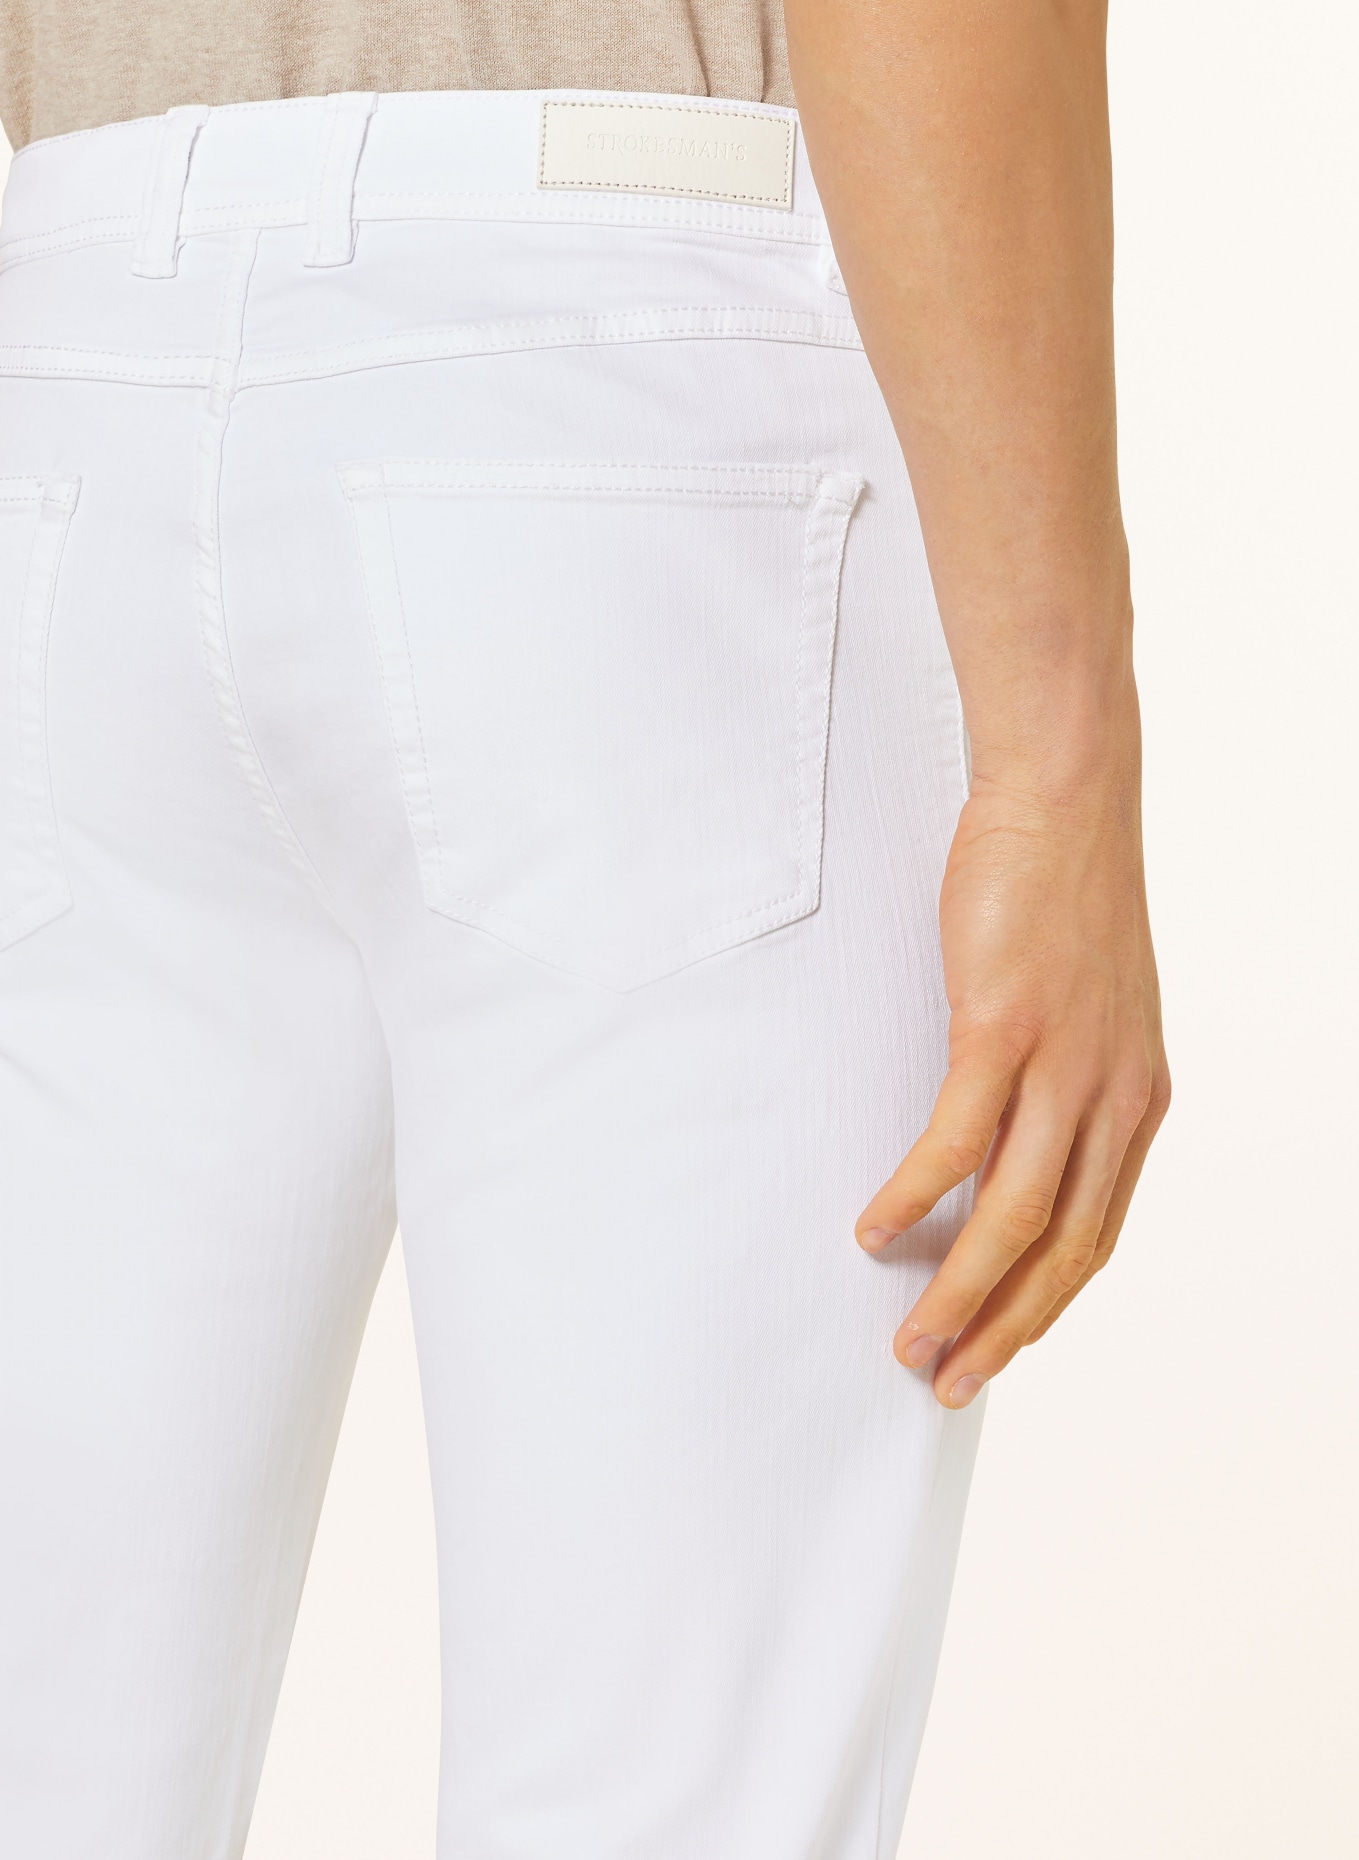 STROKESMAN'S Jeans Slim Fit, Farbe: 0132 white (Bild 6)